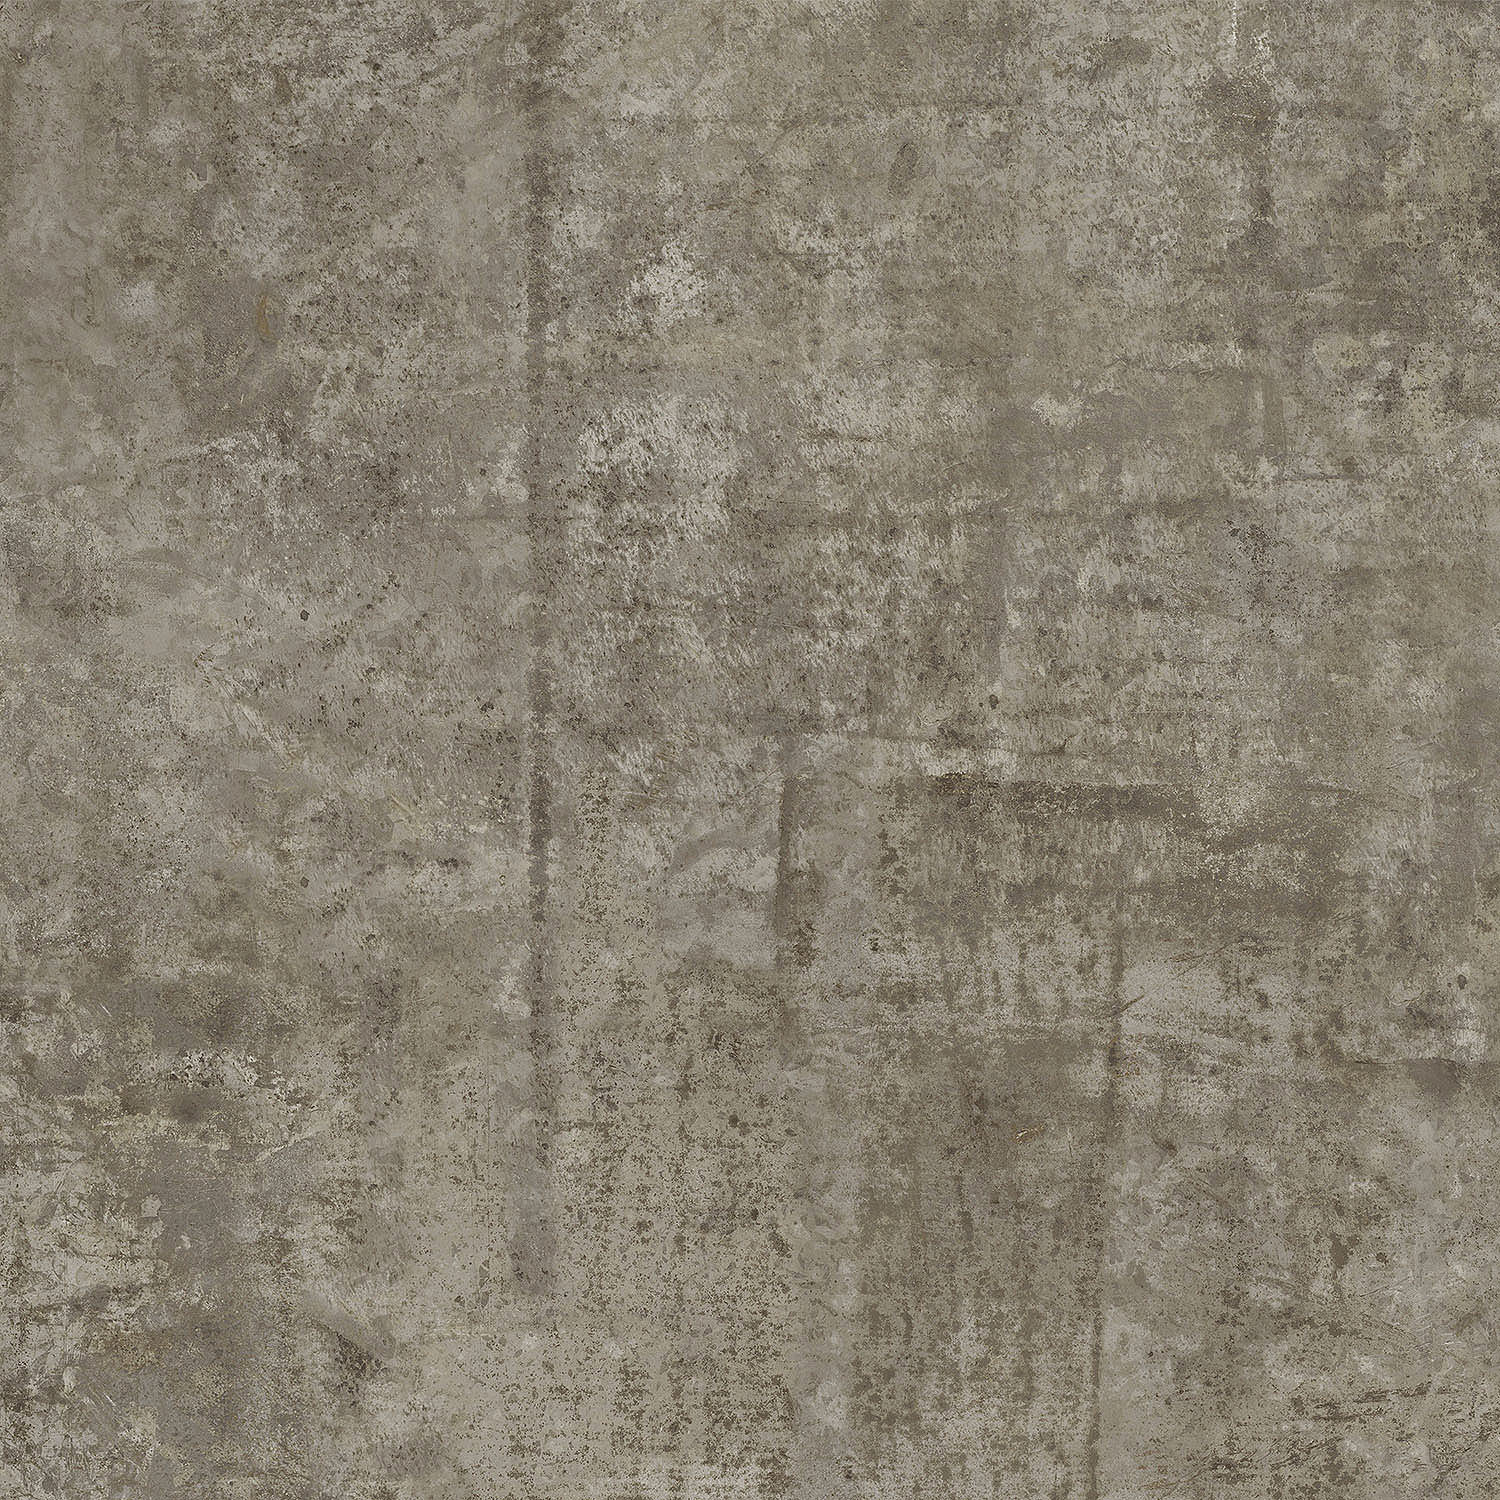 Textured Stones LVT In Emperador Taupe afbeeldingnummer 1